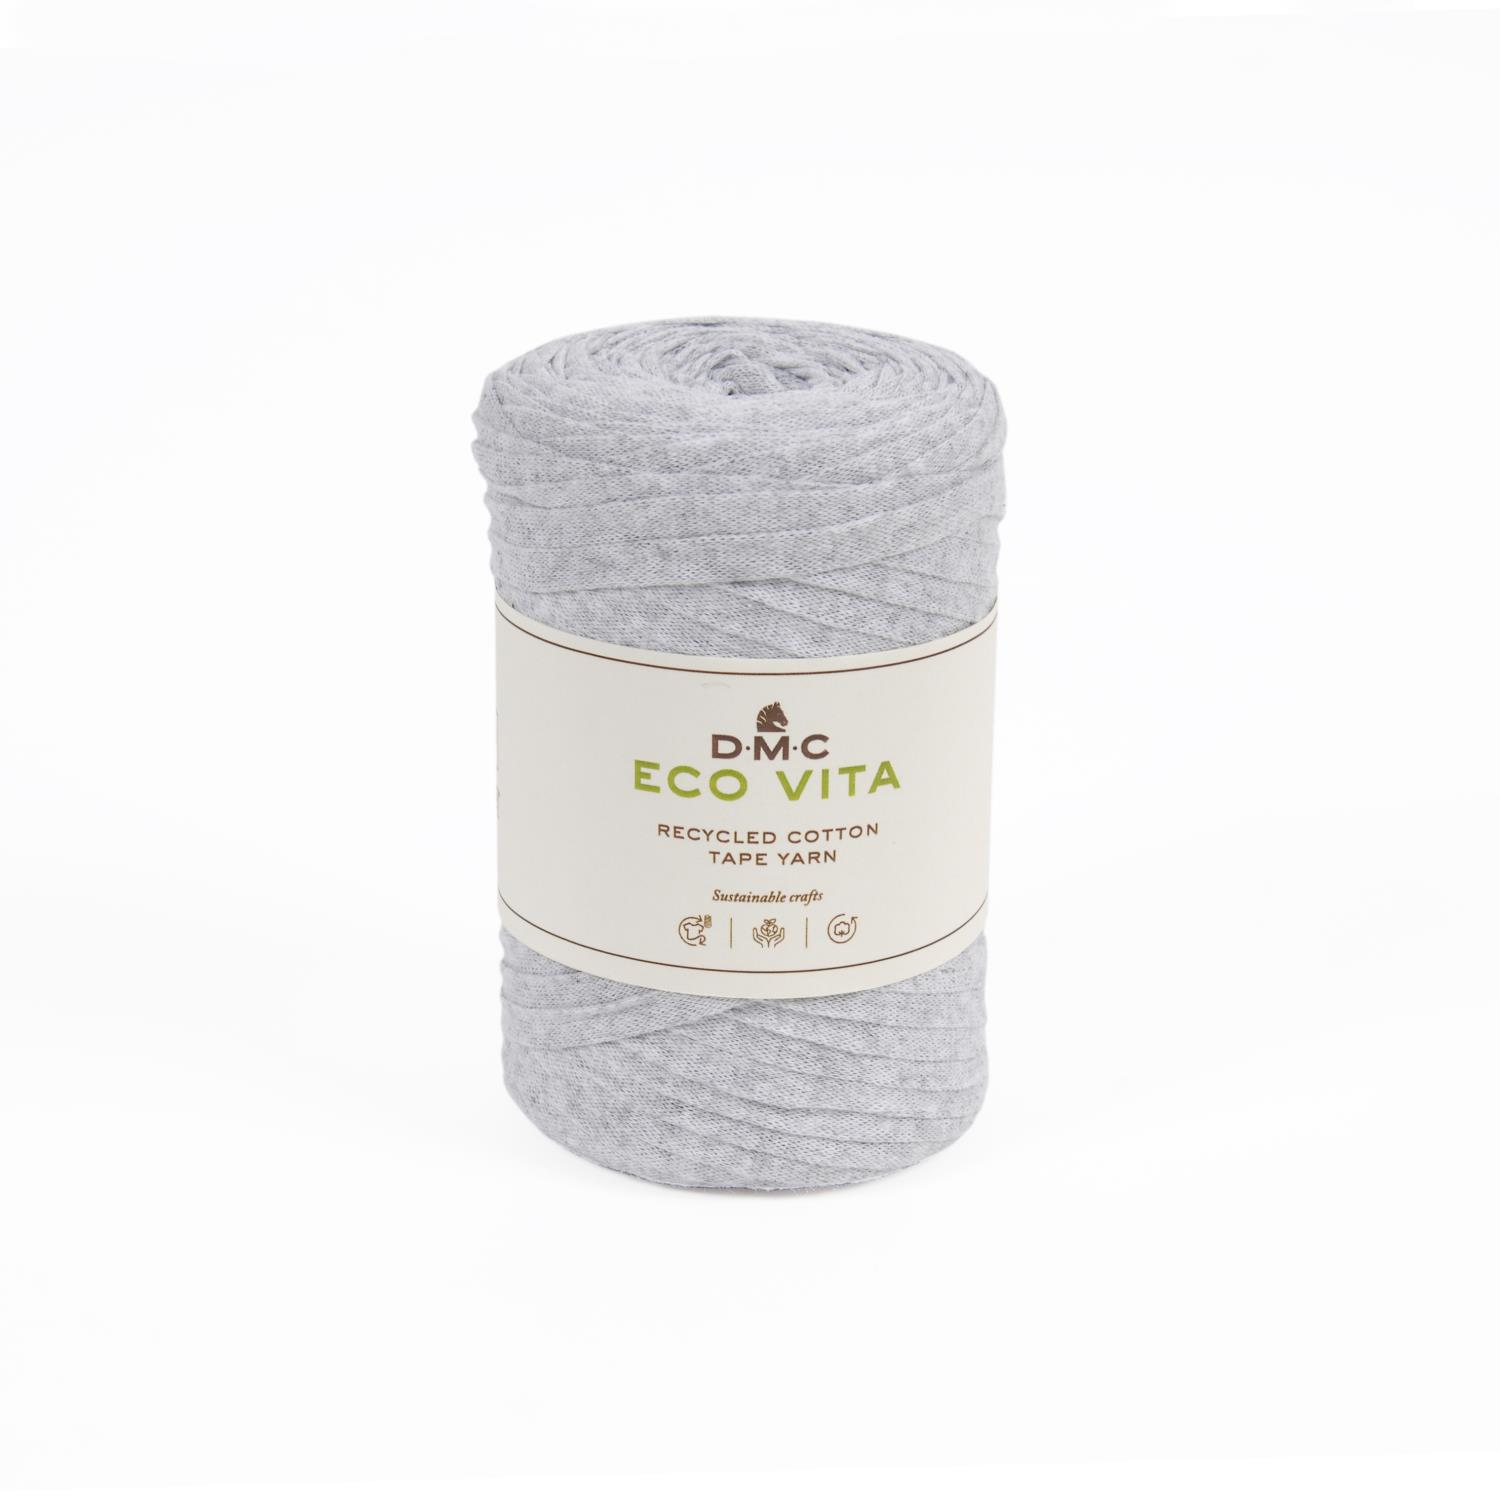 DMC Eco vita tape yarn - 012 grå melert